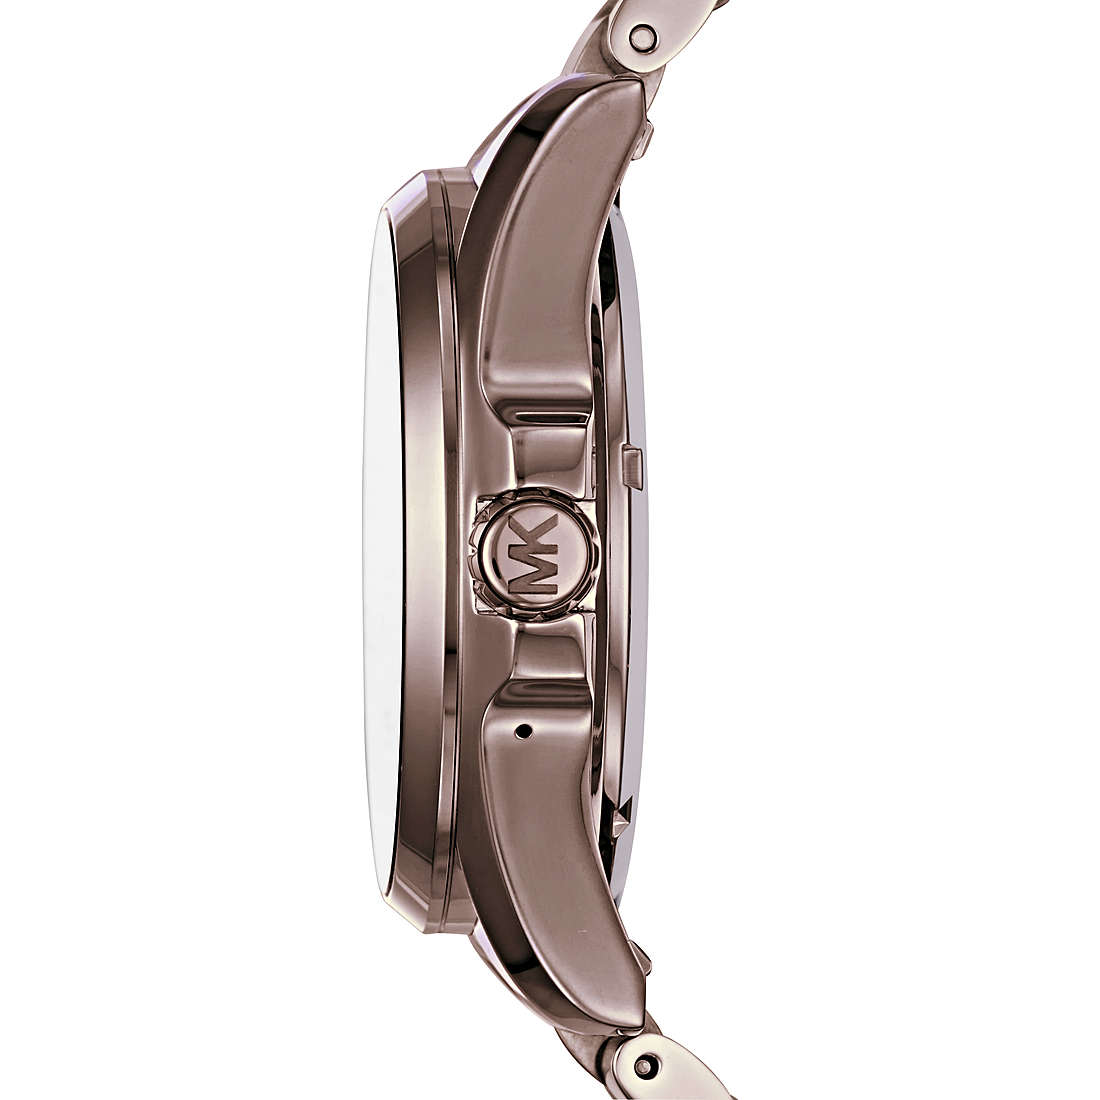 Uhr Smartwatch frau Michael Kors Bradshaw MKT5007